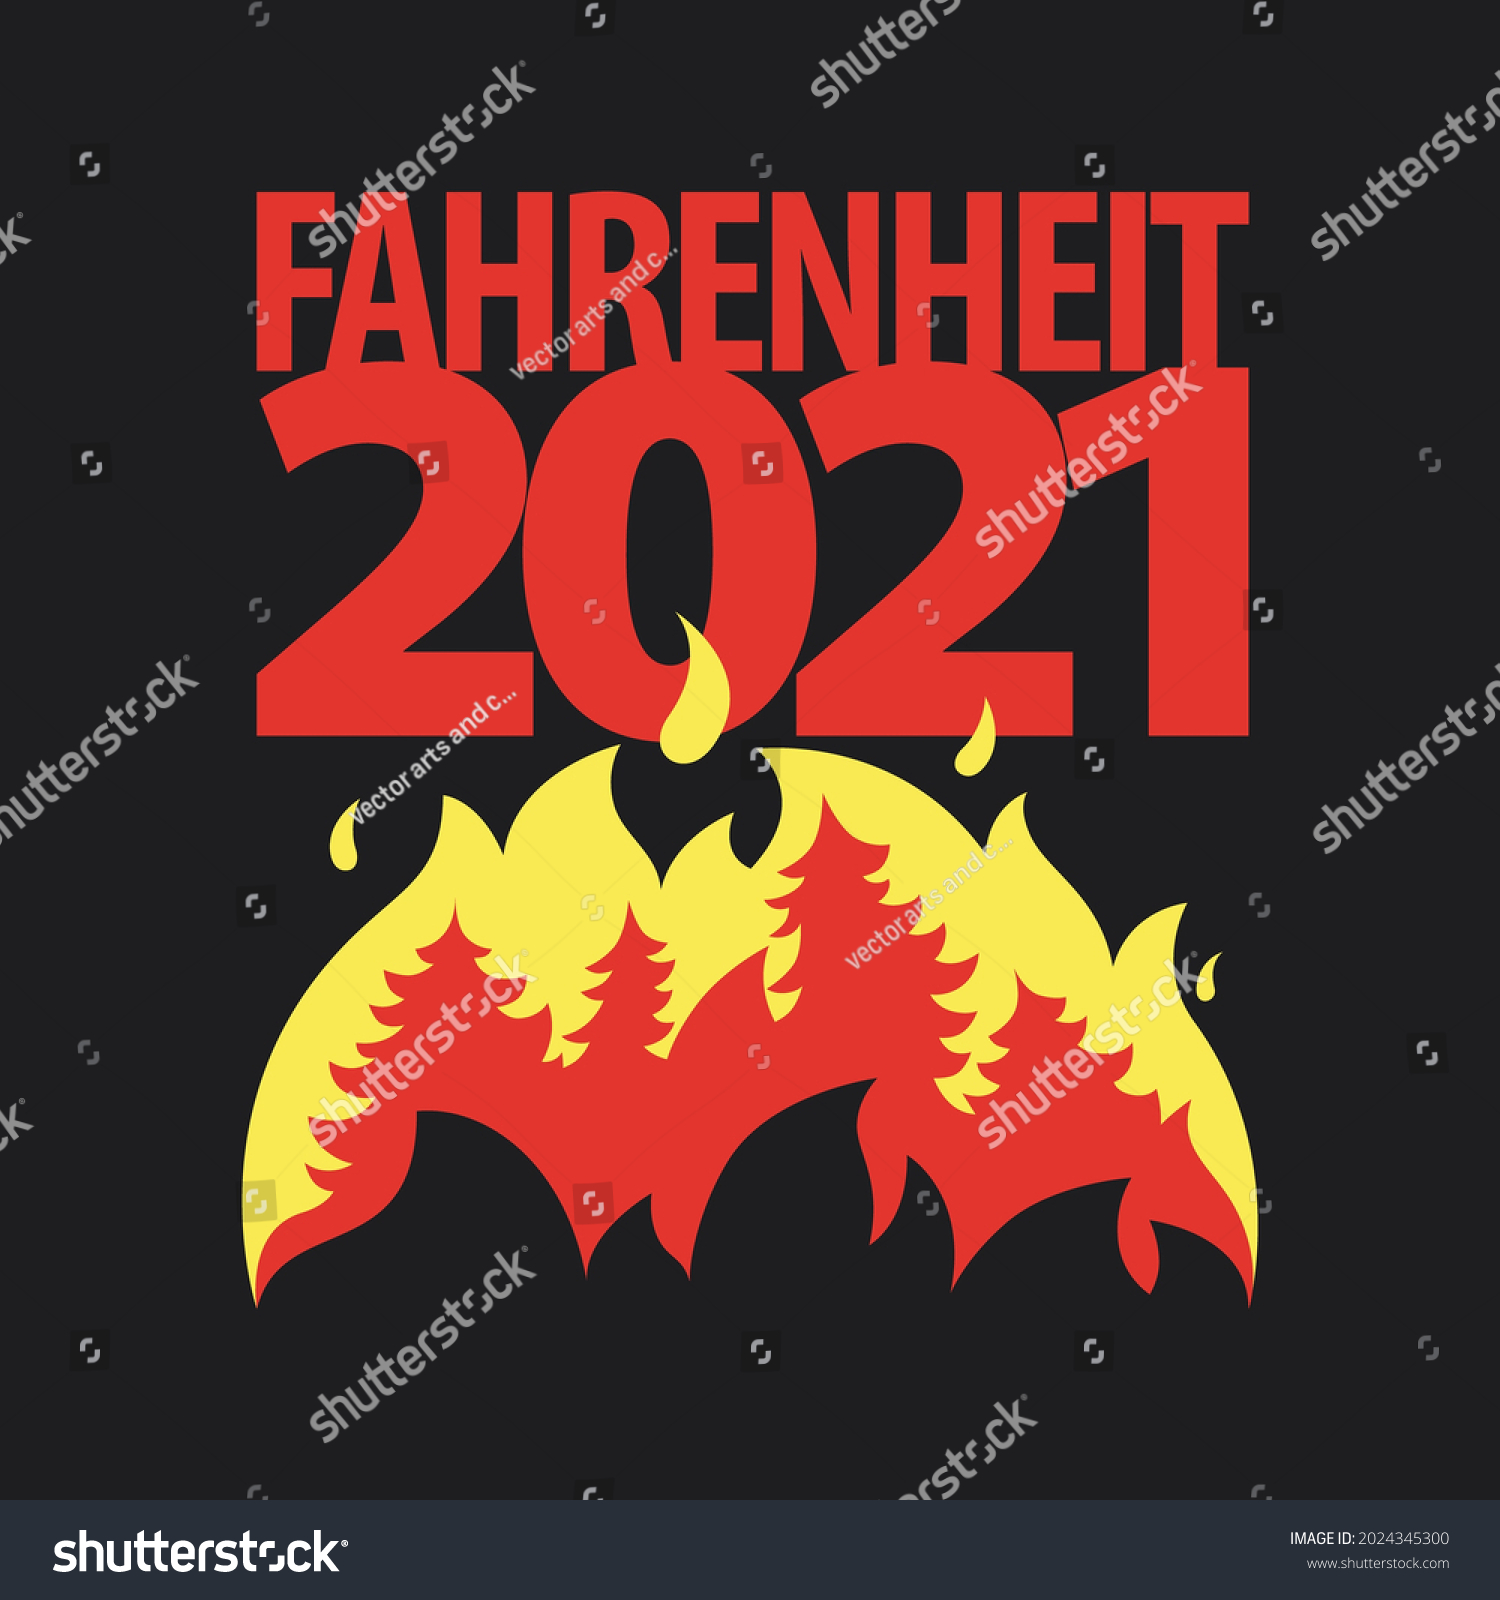 Fahrenheit 2021 Hot Summer Poster Design Royalty Free Stock Vector 2024345300 